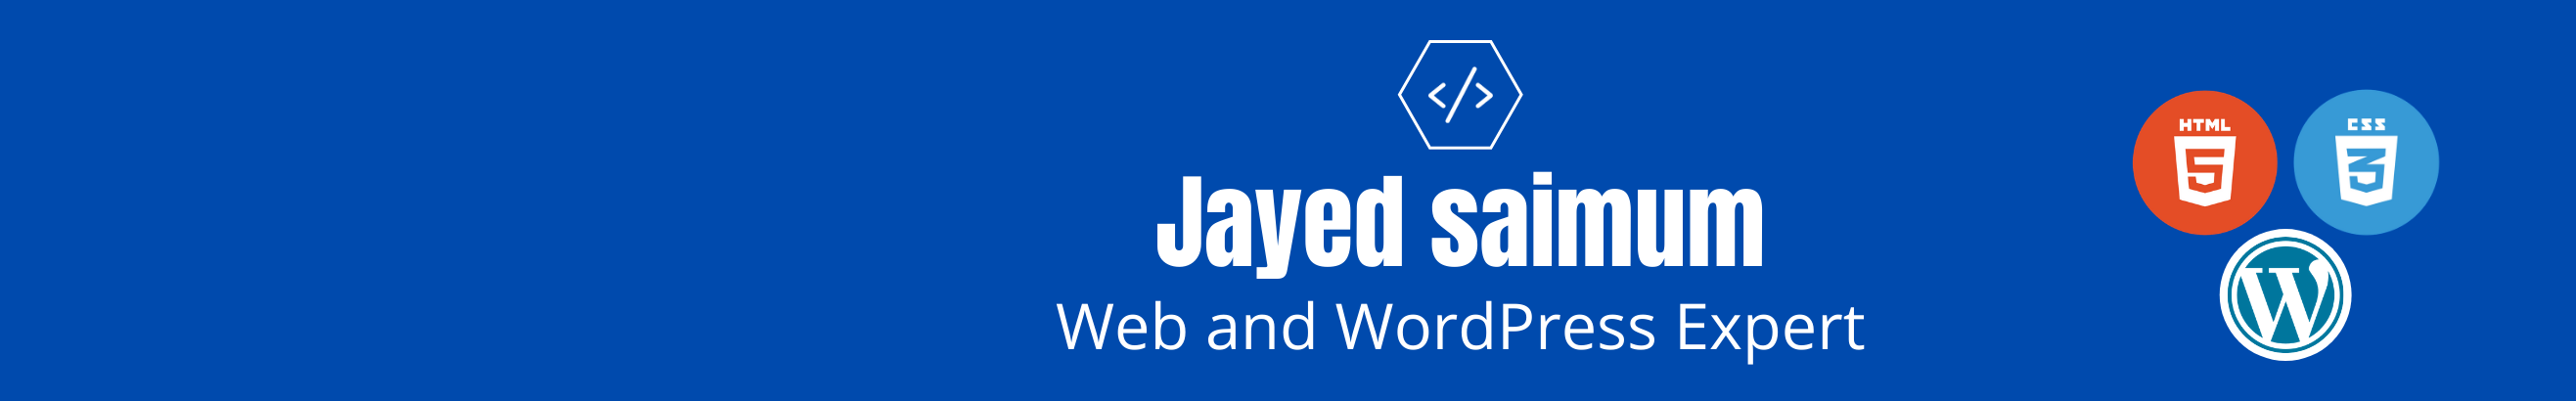 Jayed saimum's profile banner